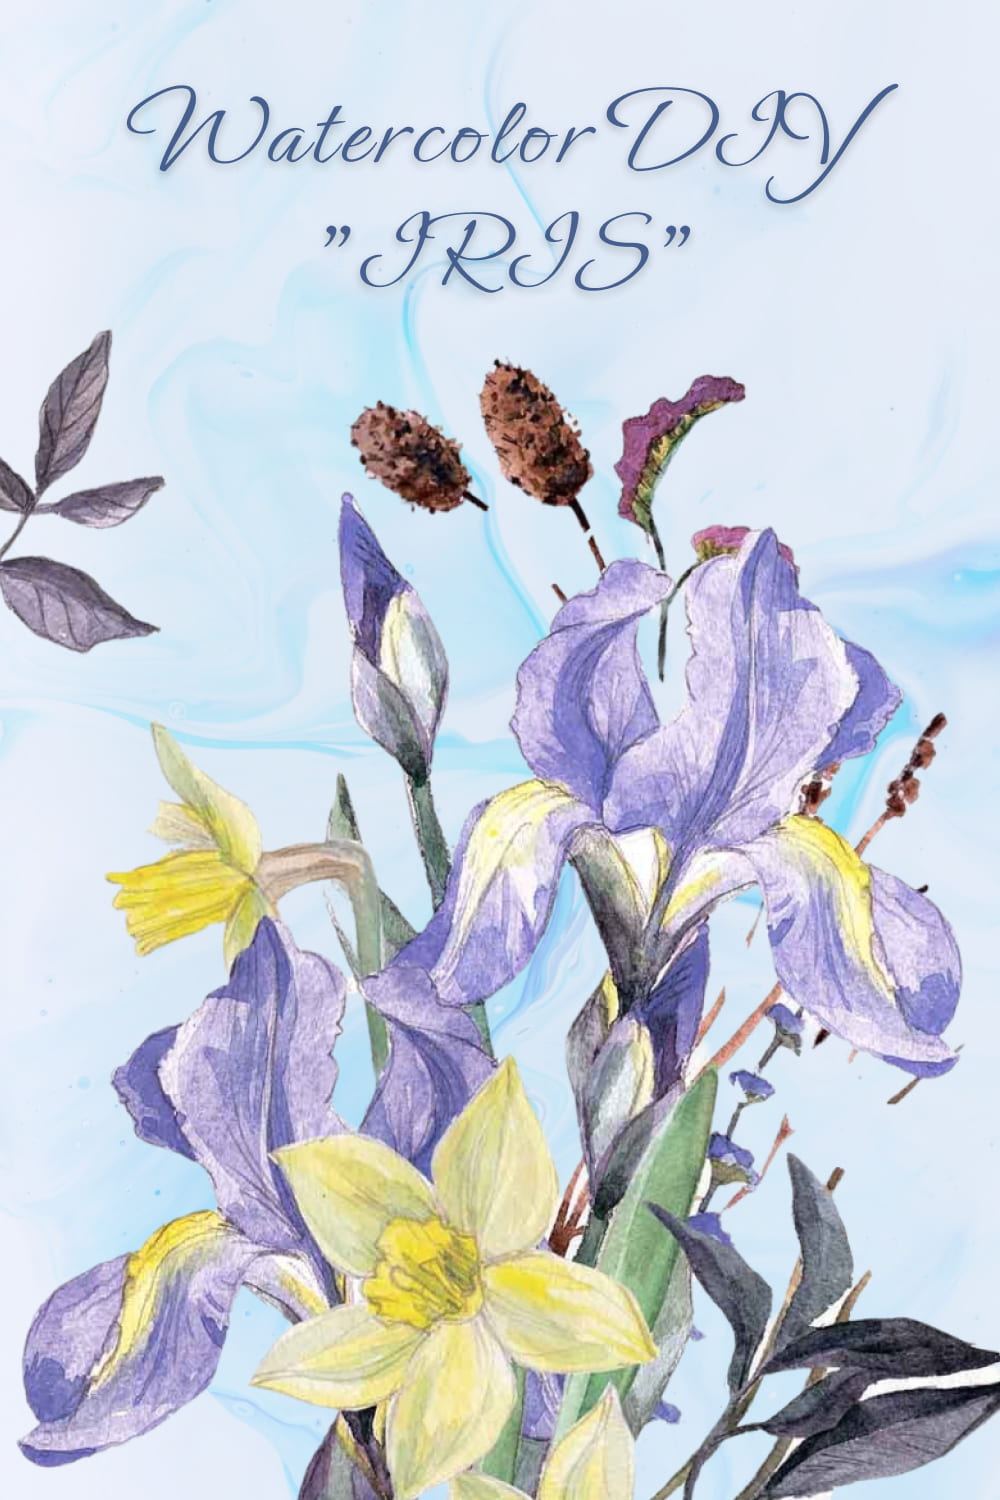 Watercolor DIY "Iris Flowers Collection" Part 1 pinterest image.